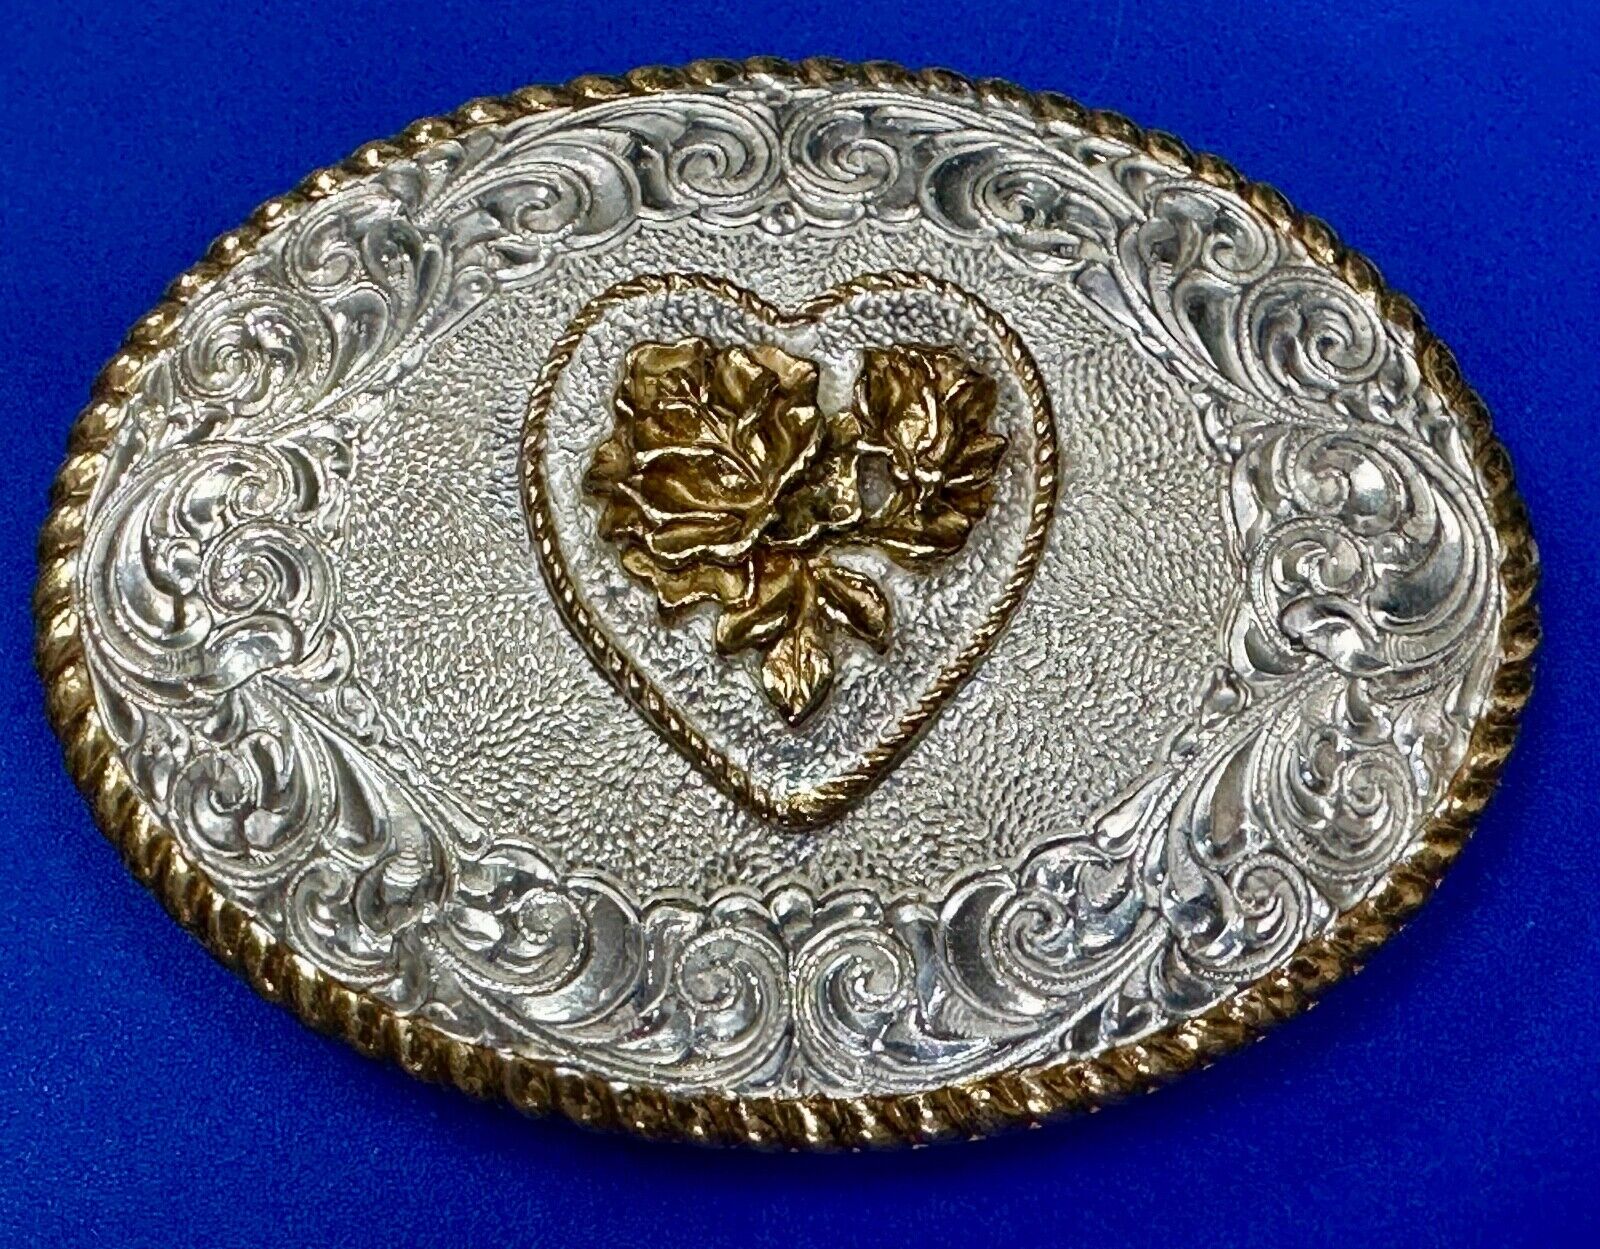 HEART Centerpiece Vintage two tone flower swirl Belt Buckle by Crumrine